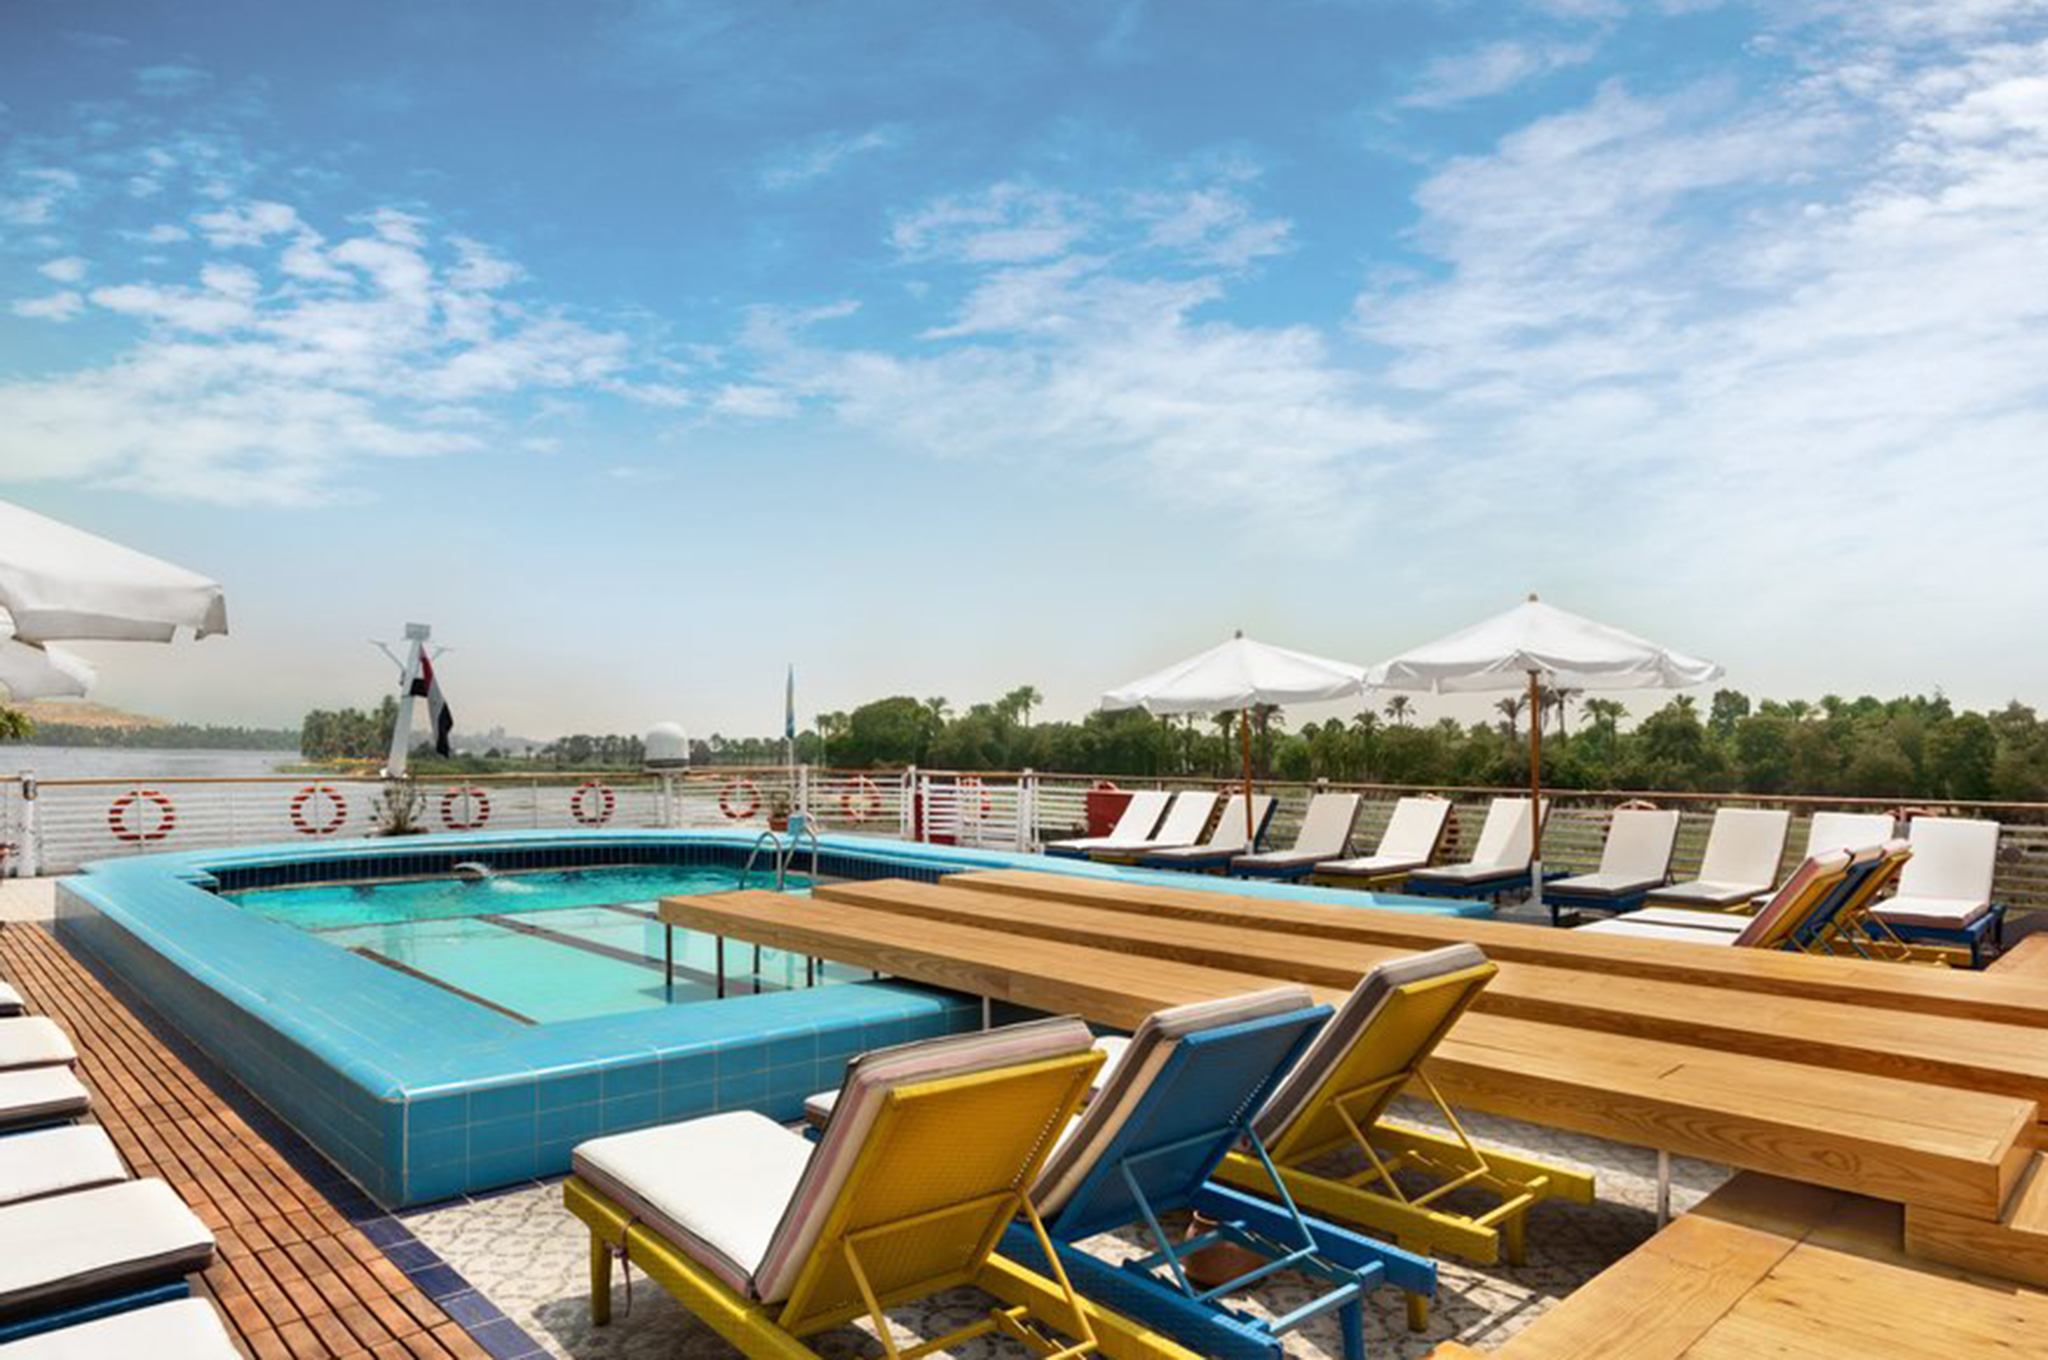 Pool Nile Vision